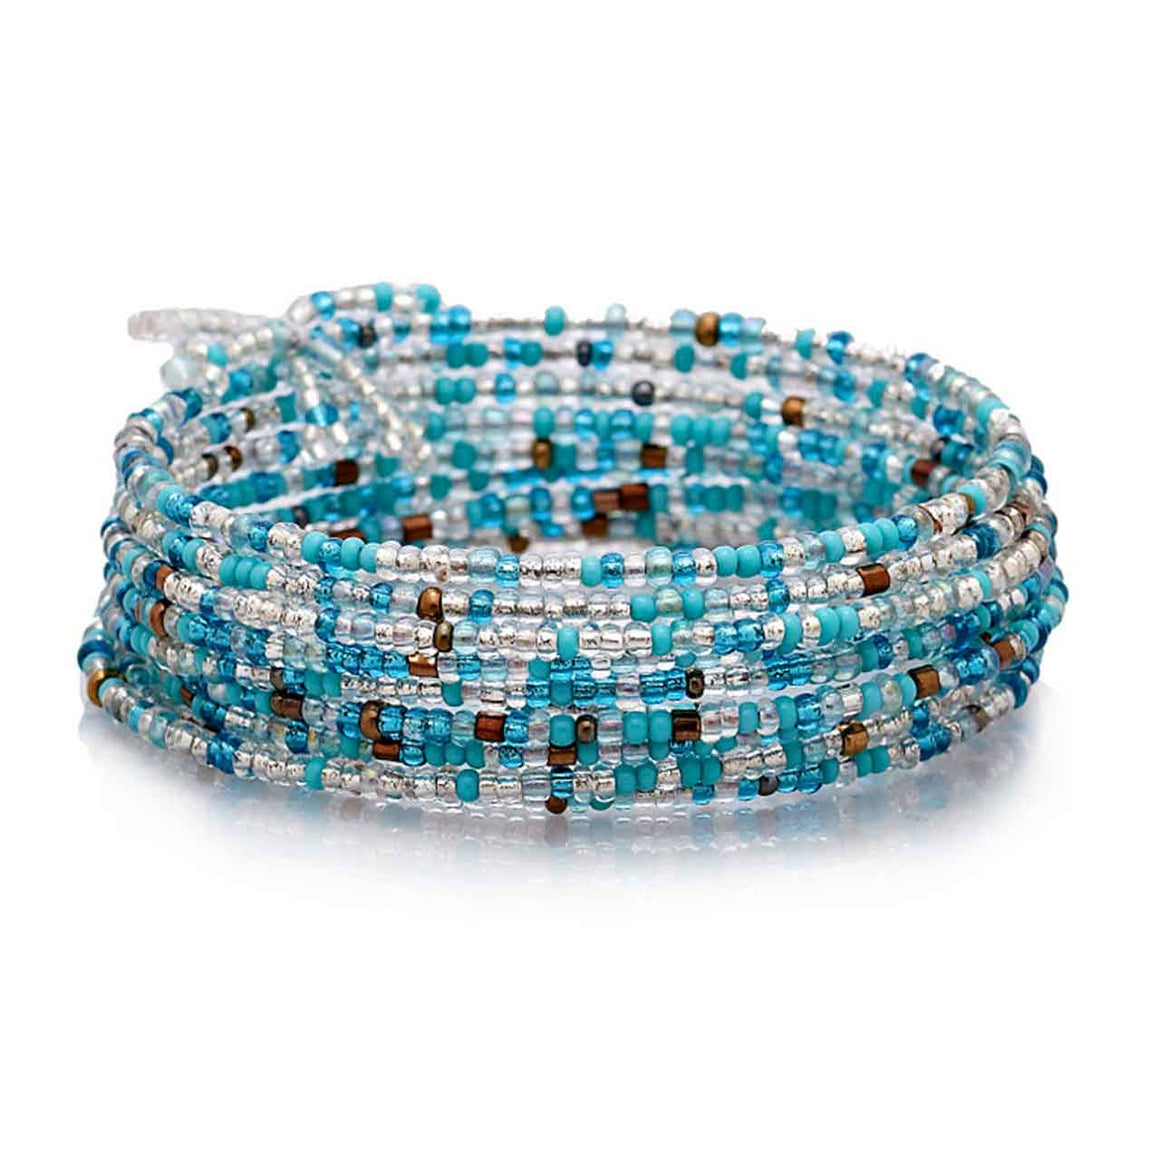 10 Row Glass Bead Bracelet - Turquoise Coloured